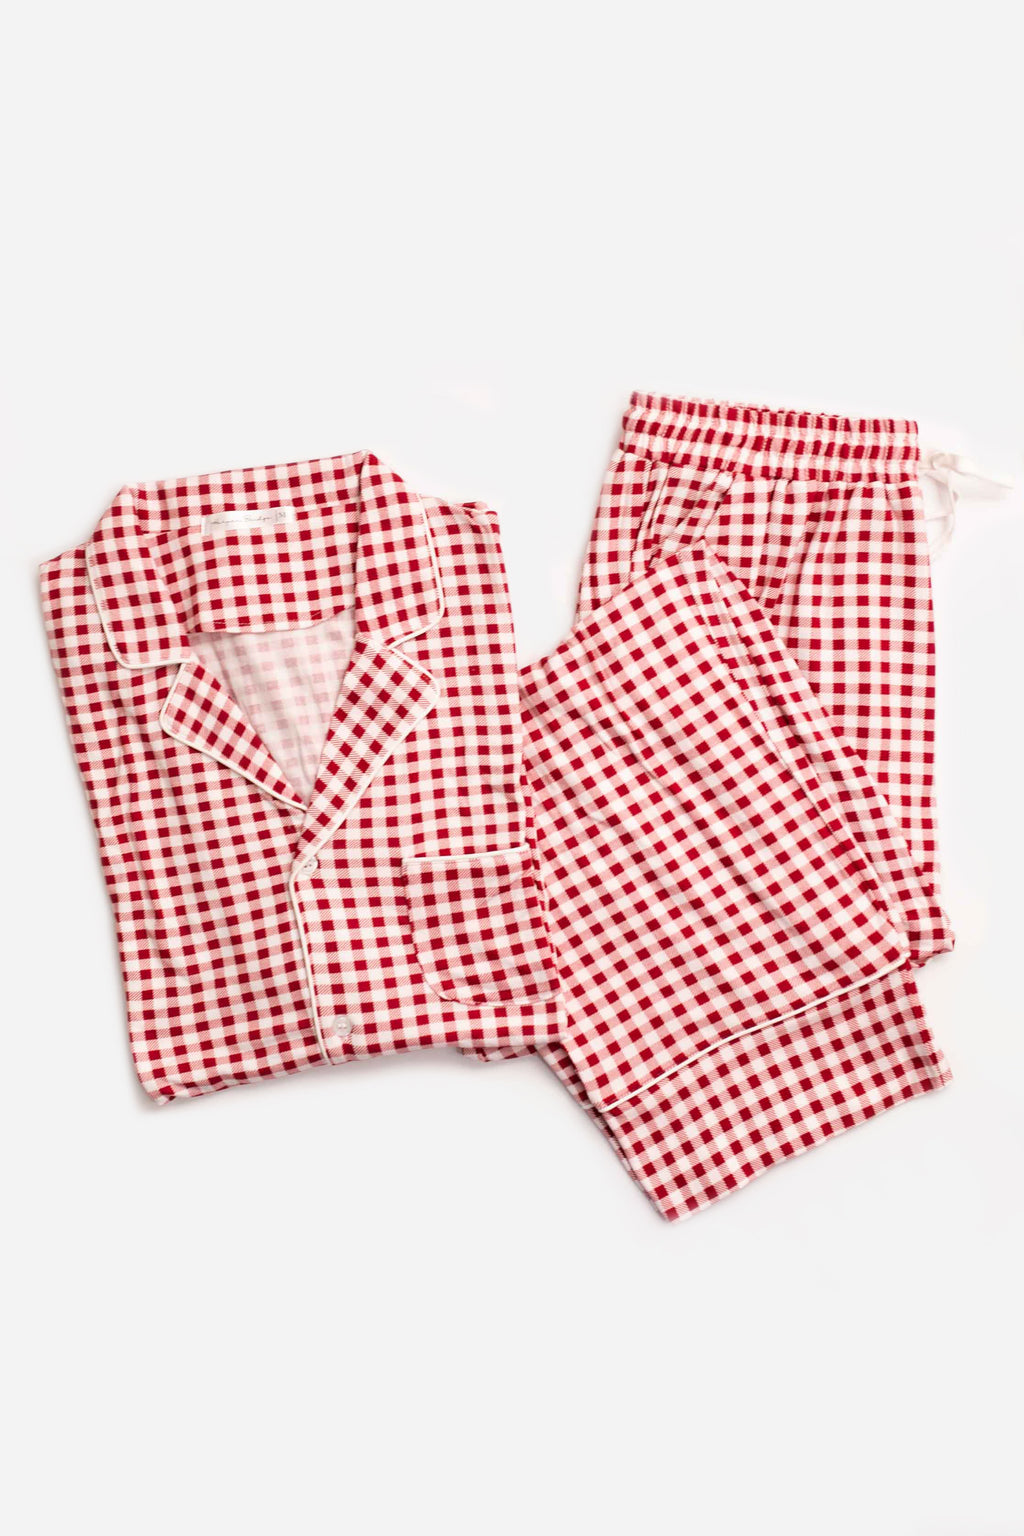 Cozy Red Gingham Men's Pajama or Boxer Set